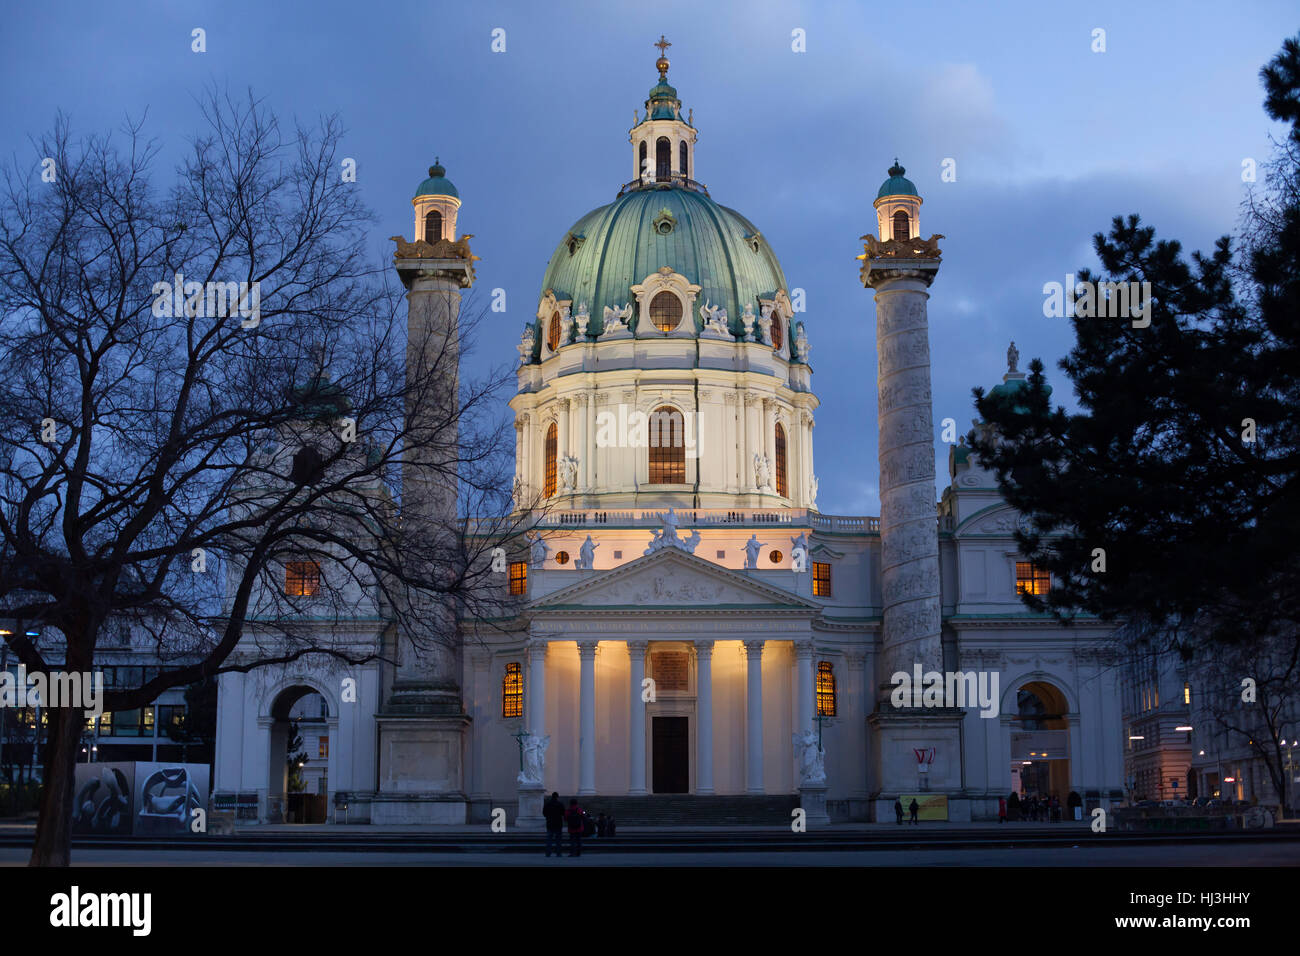 Karlskirche (St. Charles's Church) conçu par l'architecte baroque autrichien Johann Bernhard Fischer von Erlach dans la Karlsplatz à Vienne, Autriche. Banque D'Images